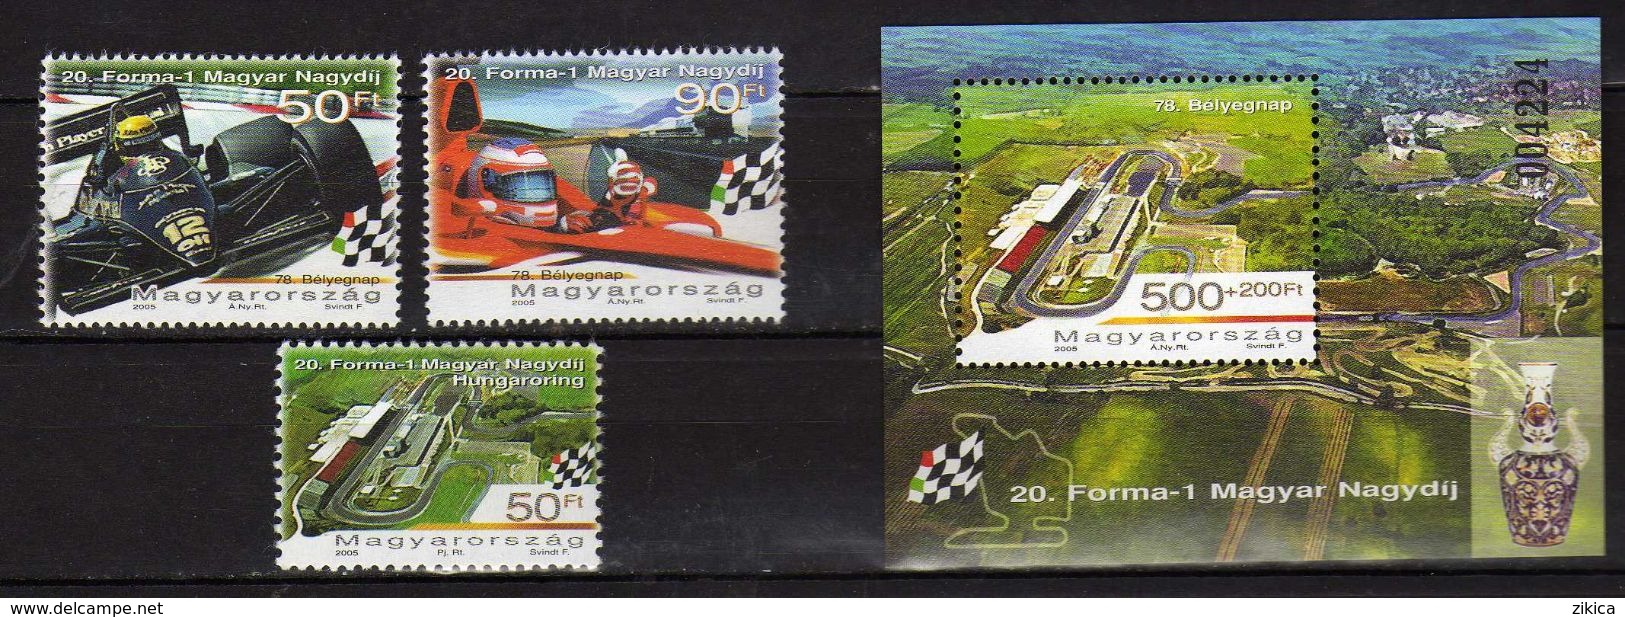 HUNGARY 2005 Stamp Day - Formula 1 Grand Prix Of Hungary And Hungaroring. Car Racing. MNH - Nuovi